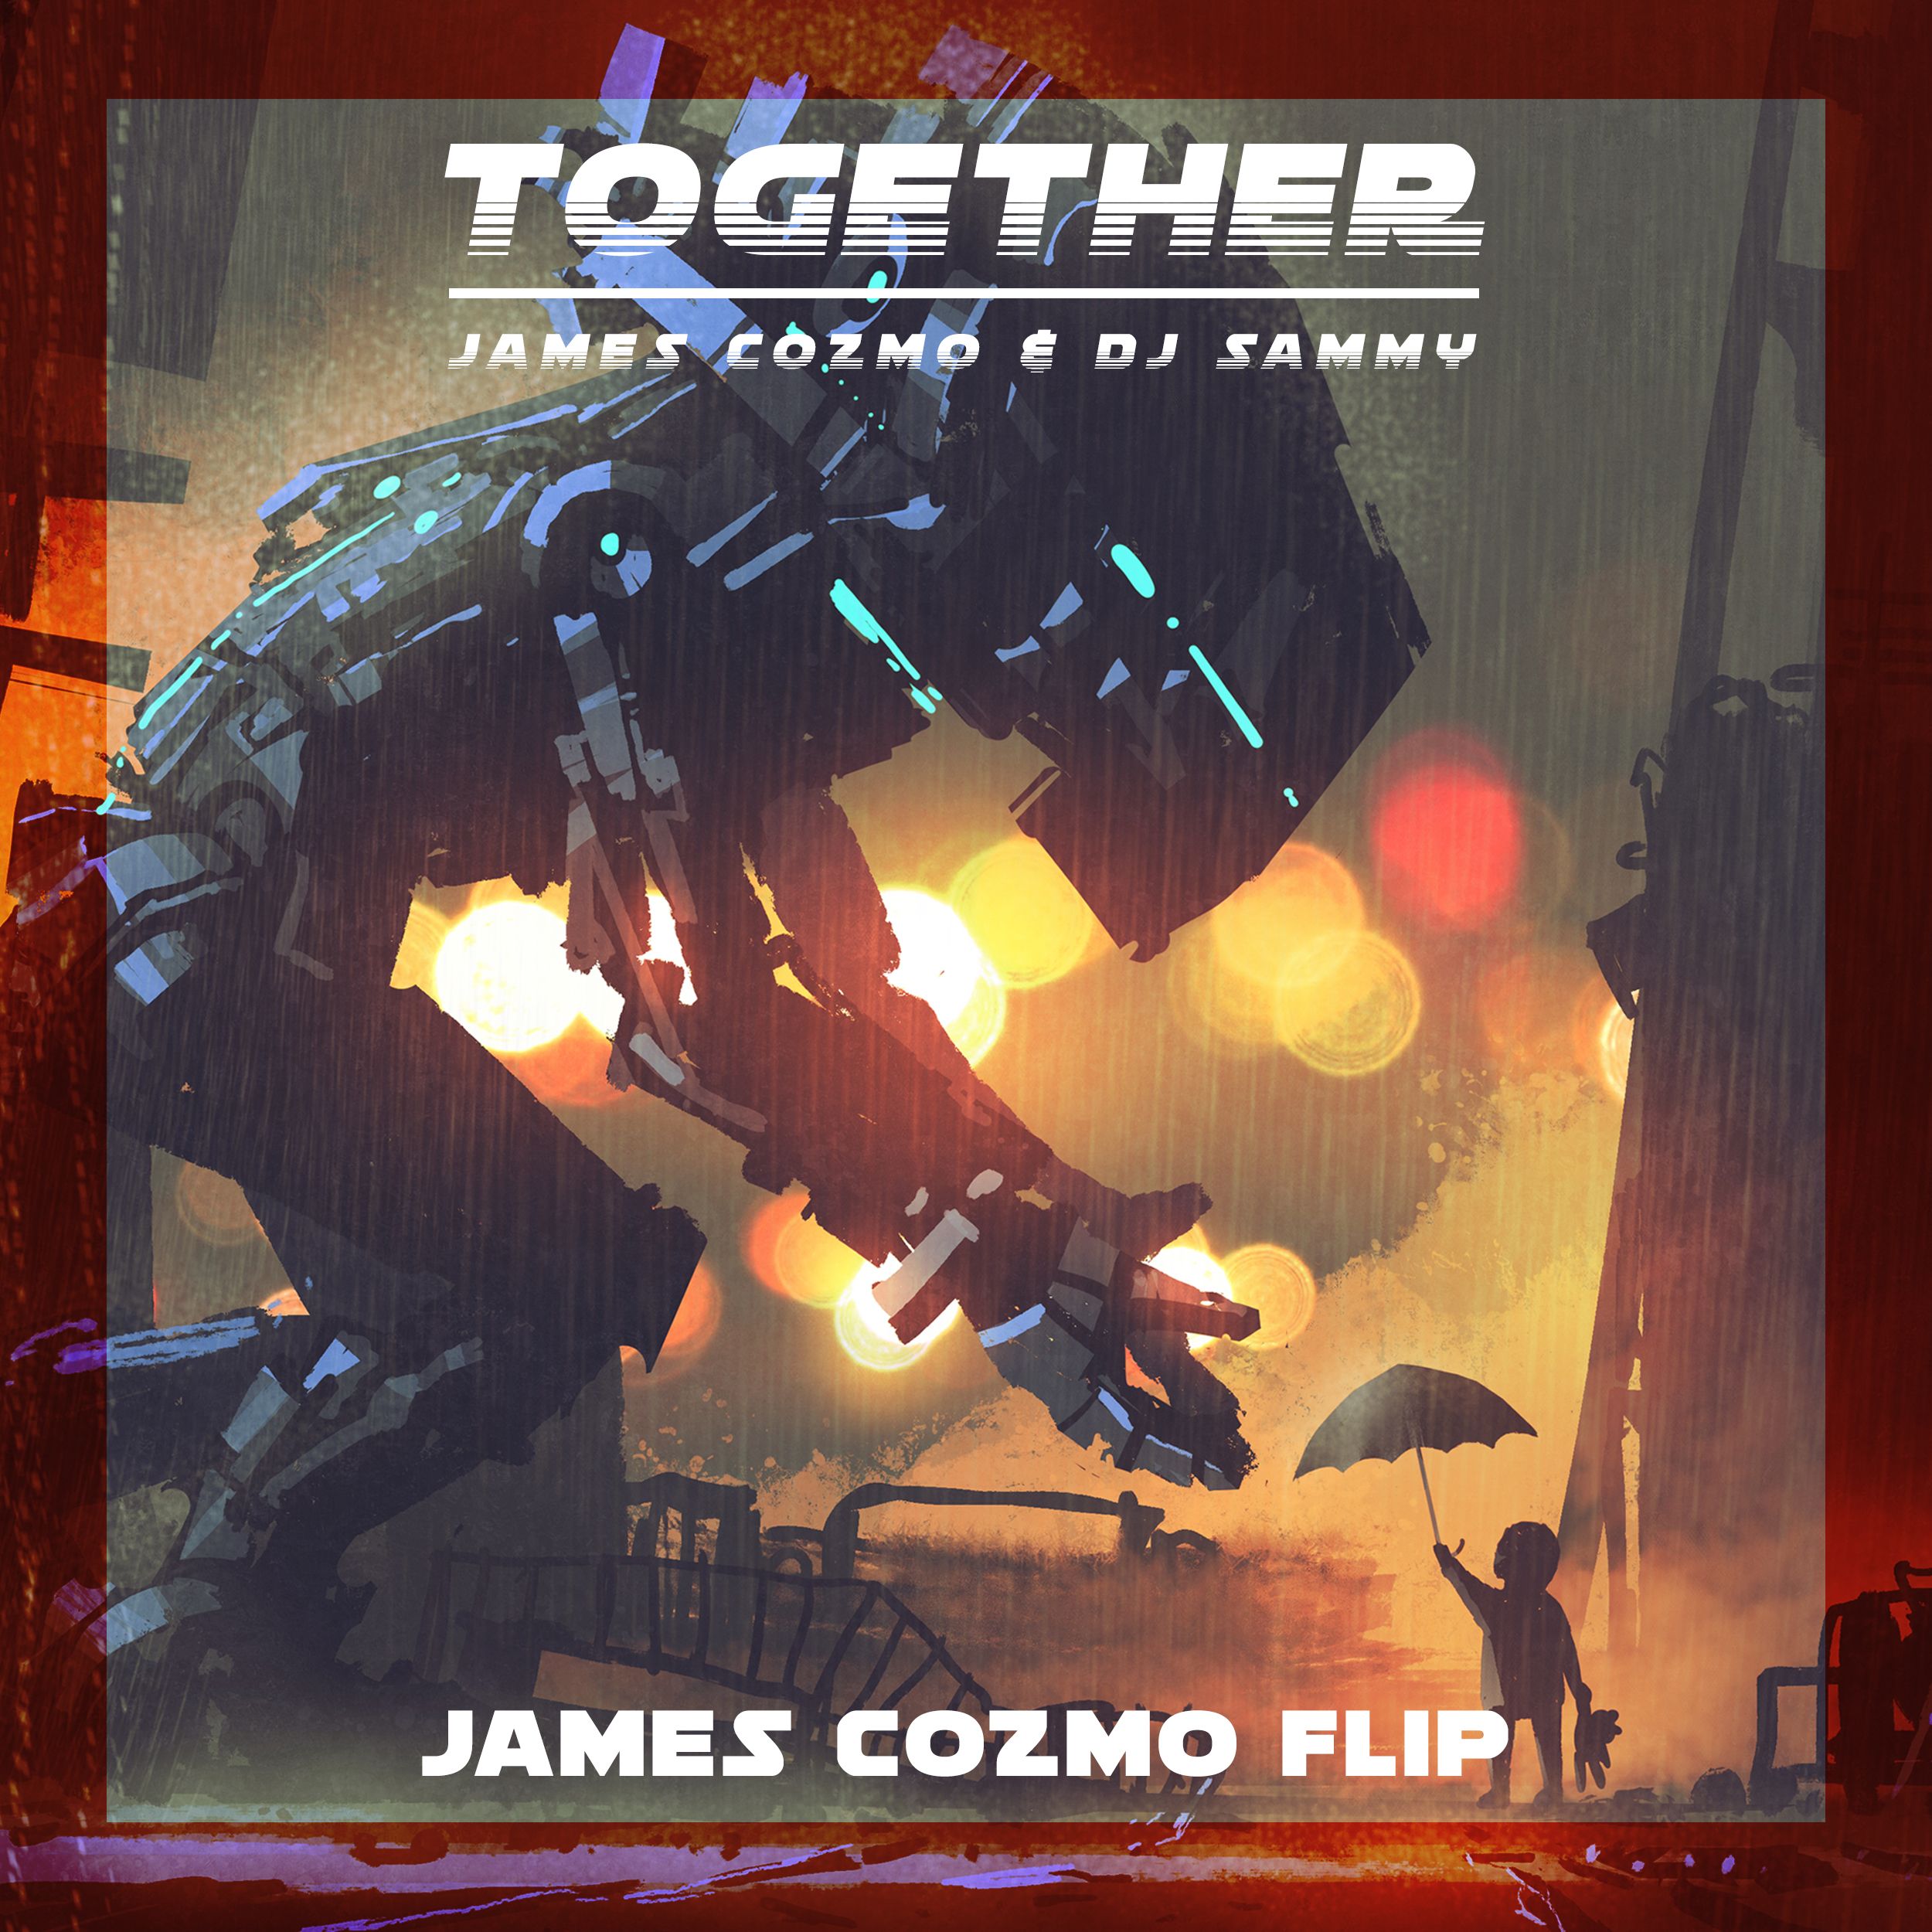 James Cozmo & DJ Sammy - Together (James Cozmo Flip) Free DL